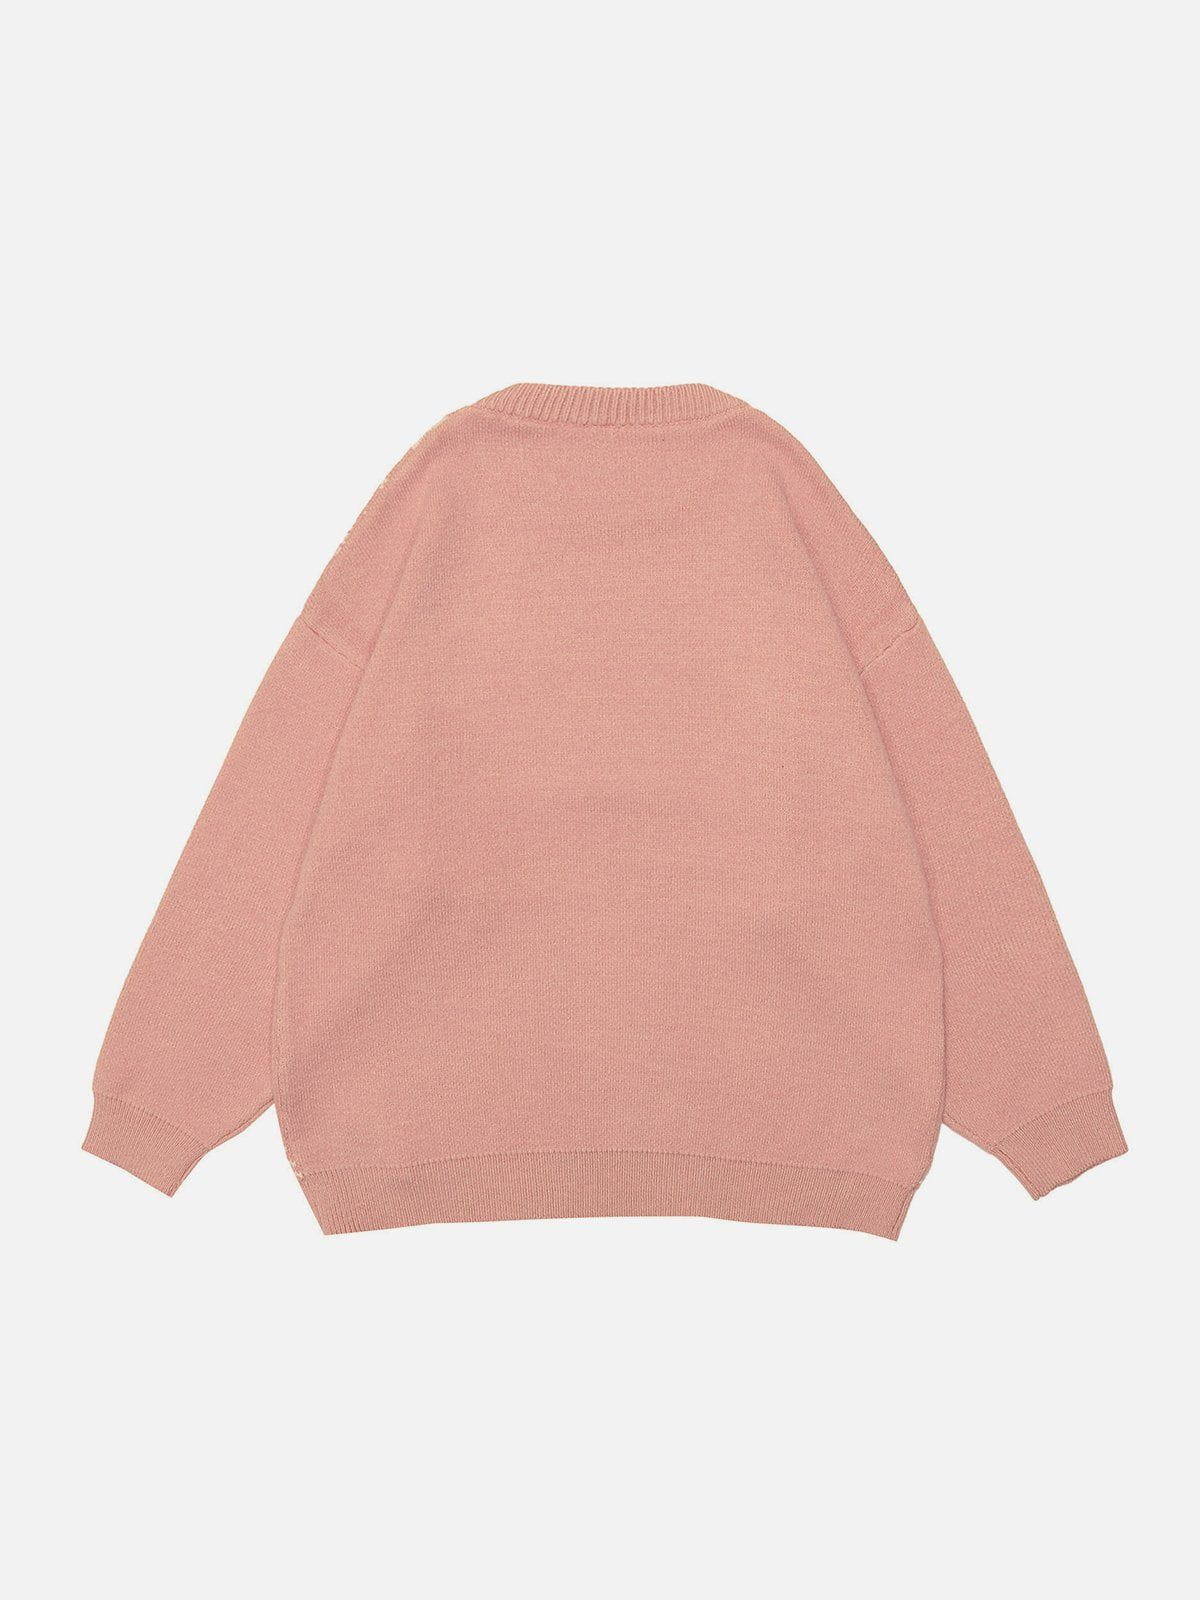 Majesda® - Rabbit Print Sweater outfit ideas streetwear fashion